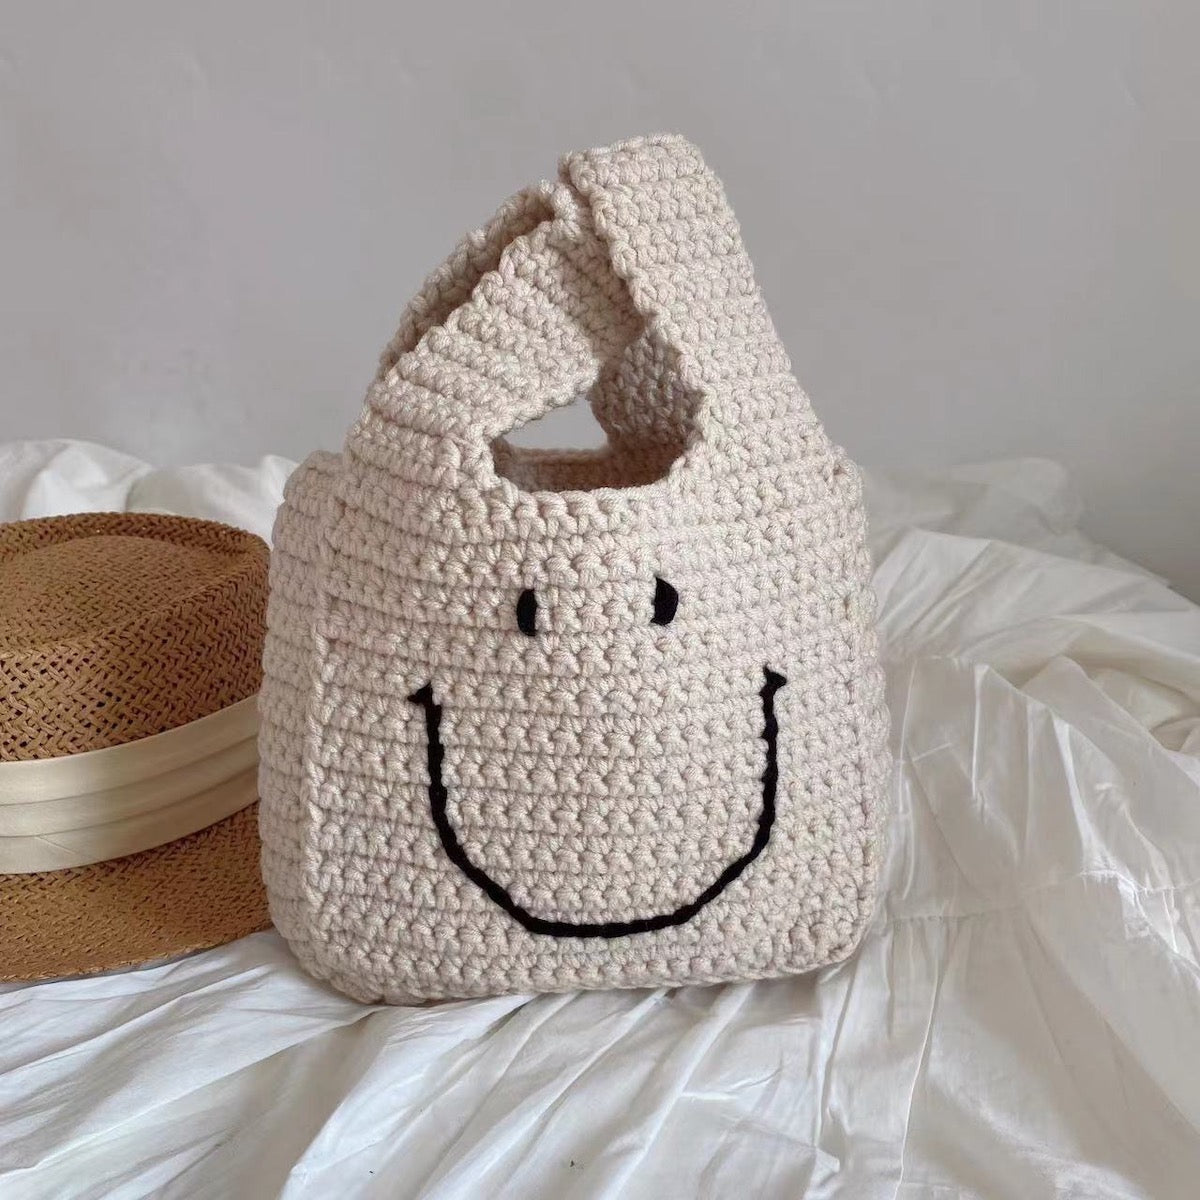 Crochet Smiley Granny Square: Crochet pattern | Ribblr